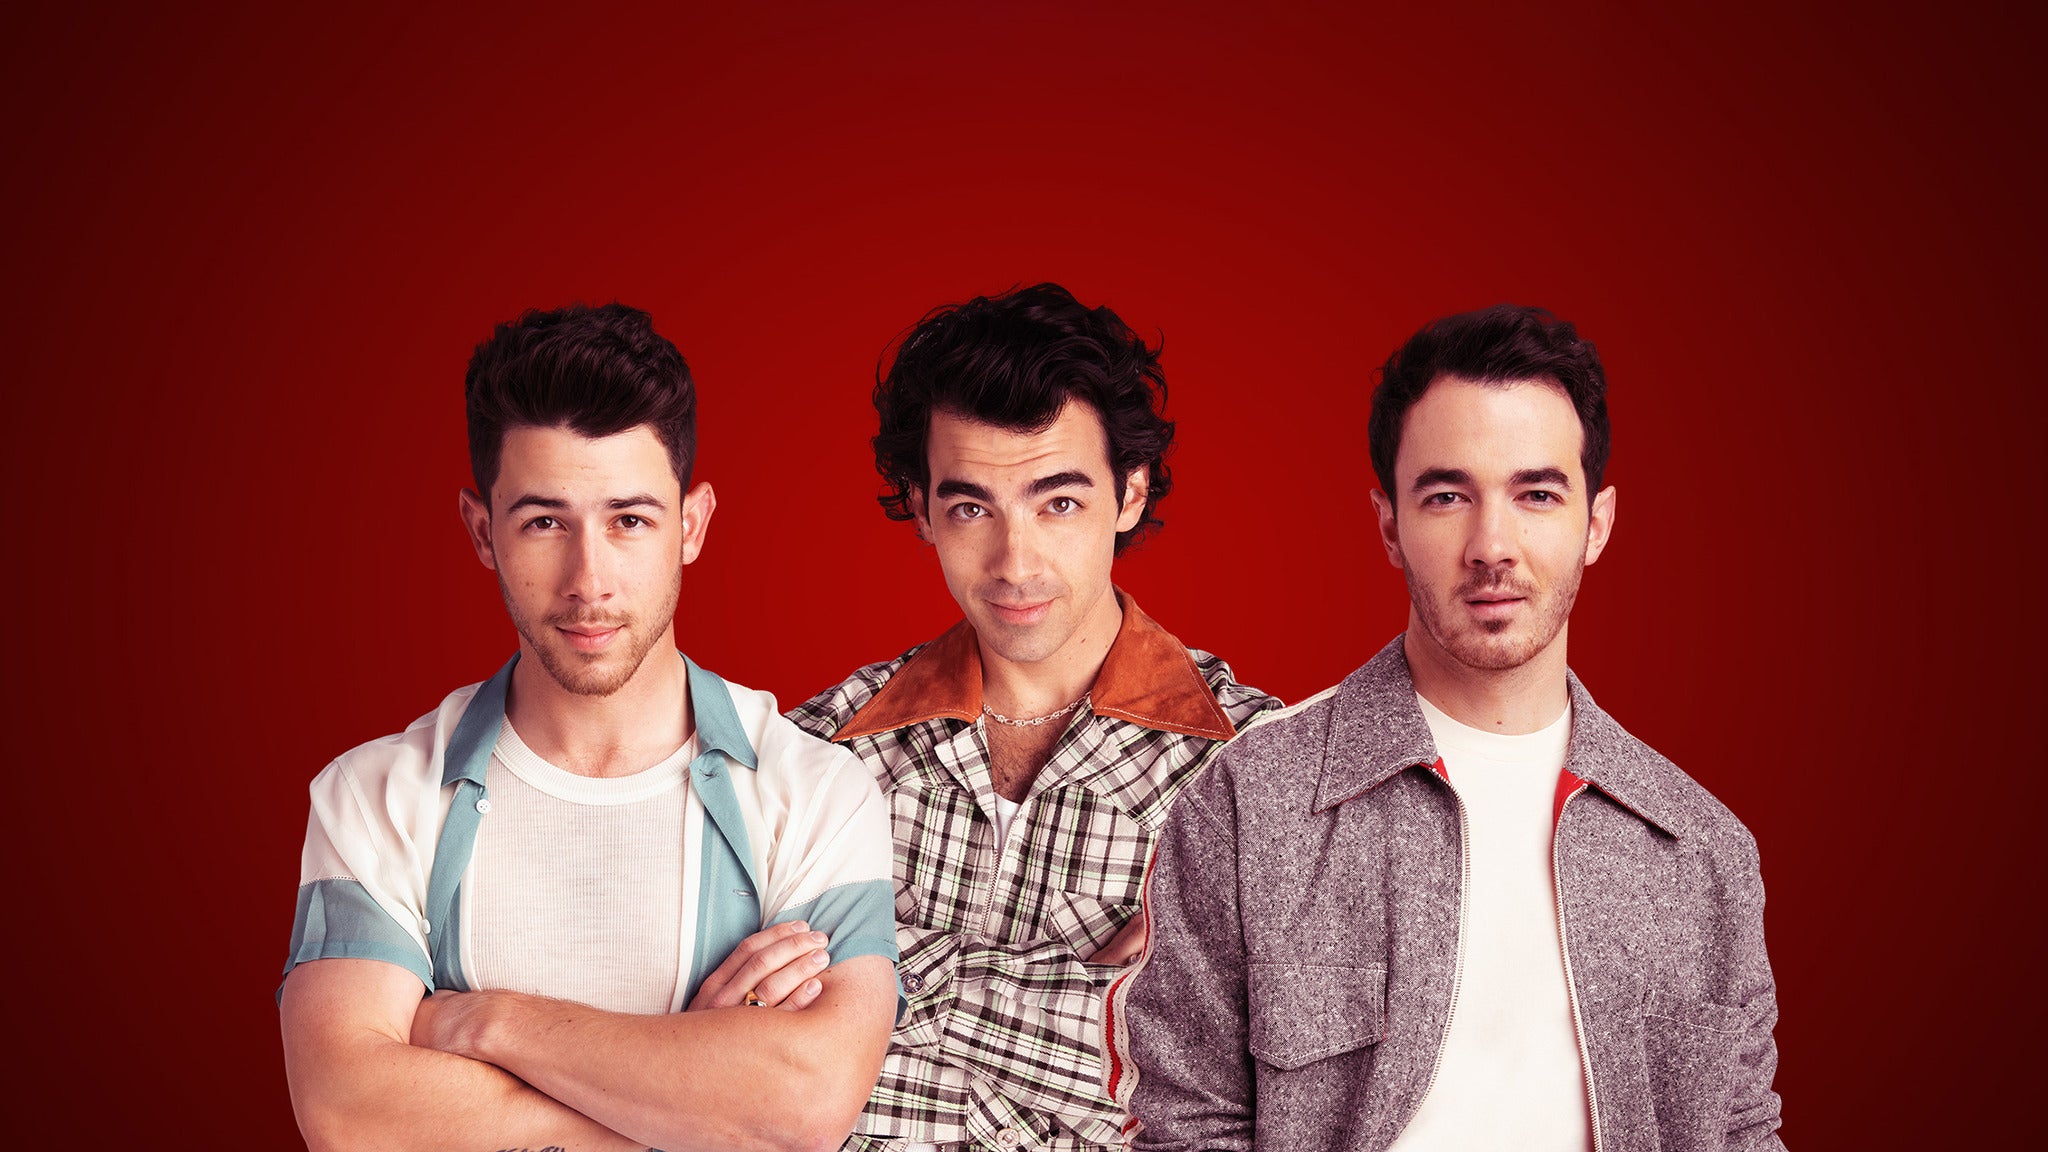 Jonas Brothers: Live in Las Vegas in Las Vegas promo photo for Live Nation presale offer code